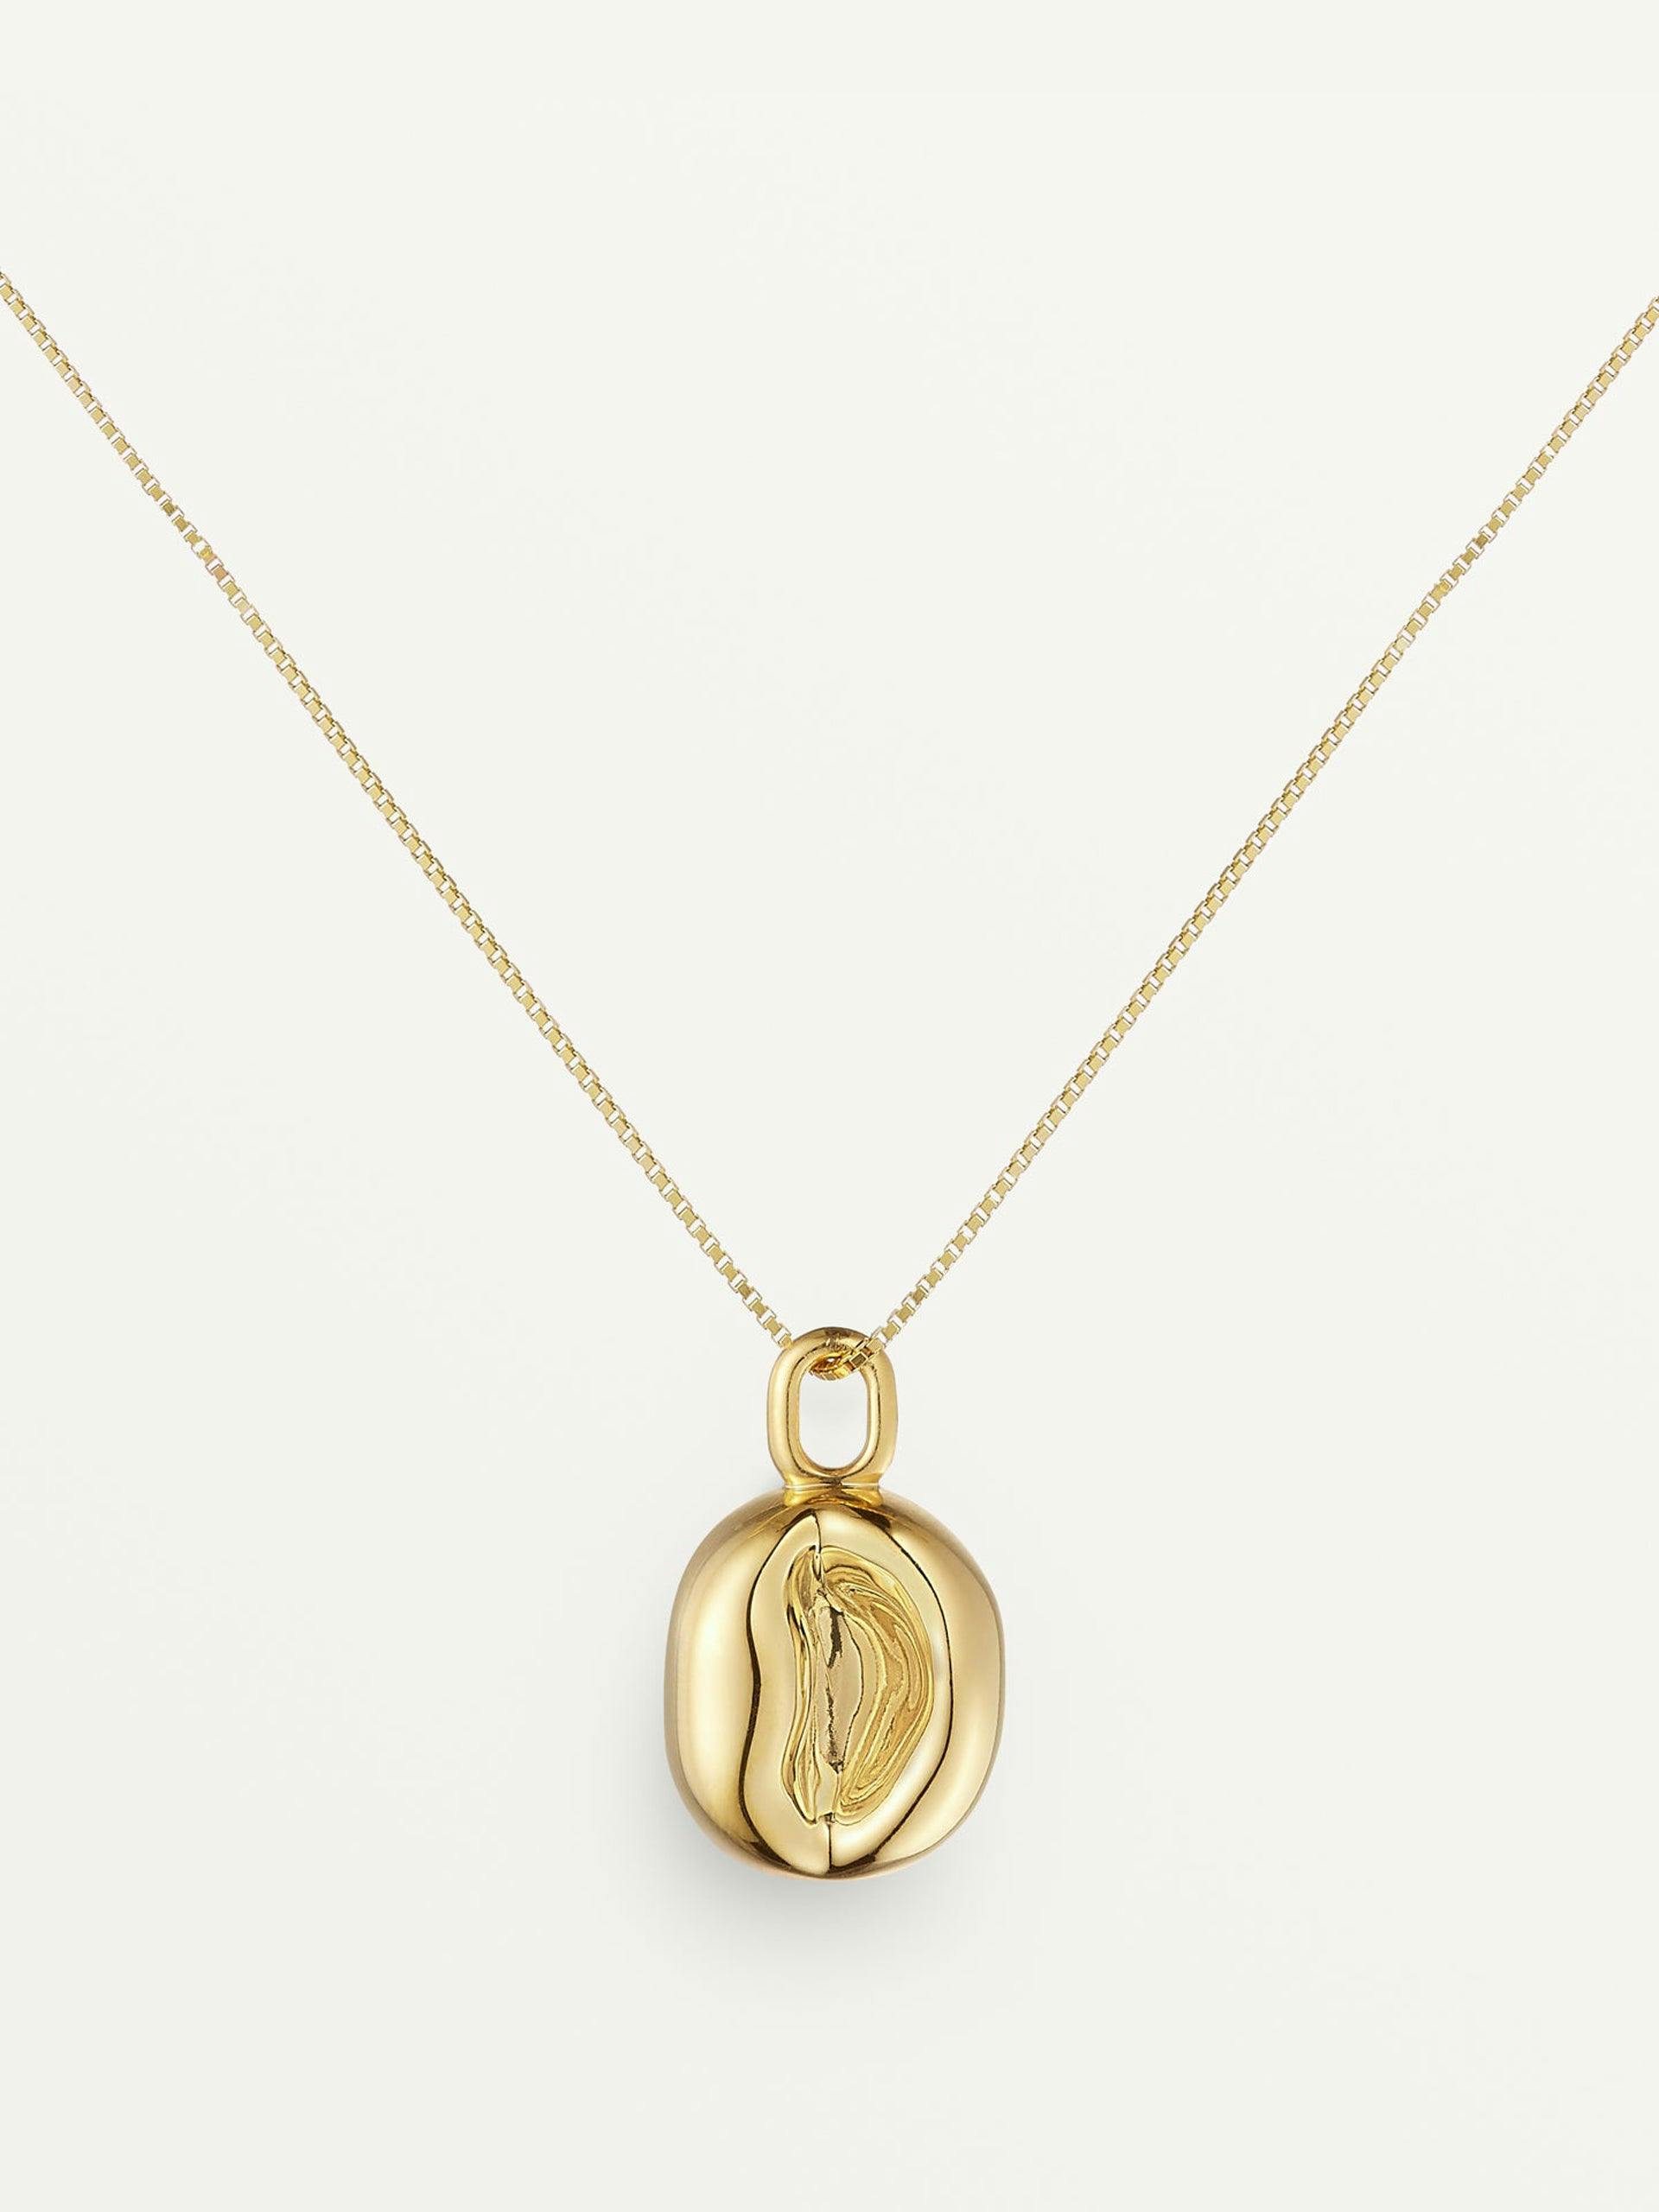 18kt gold vermeil necklace